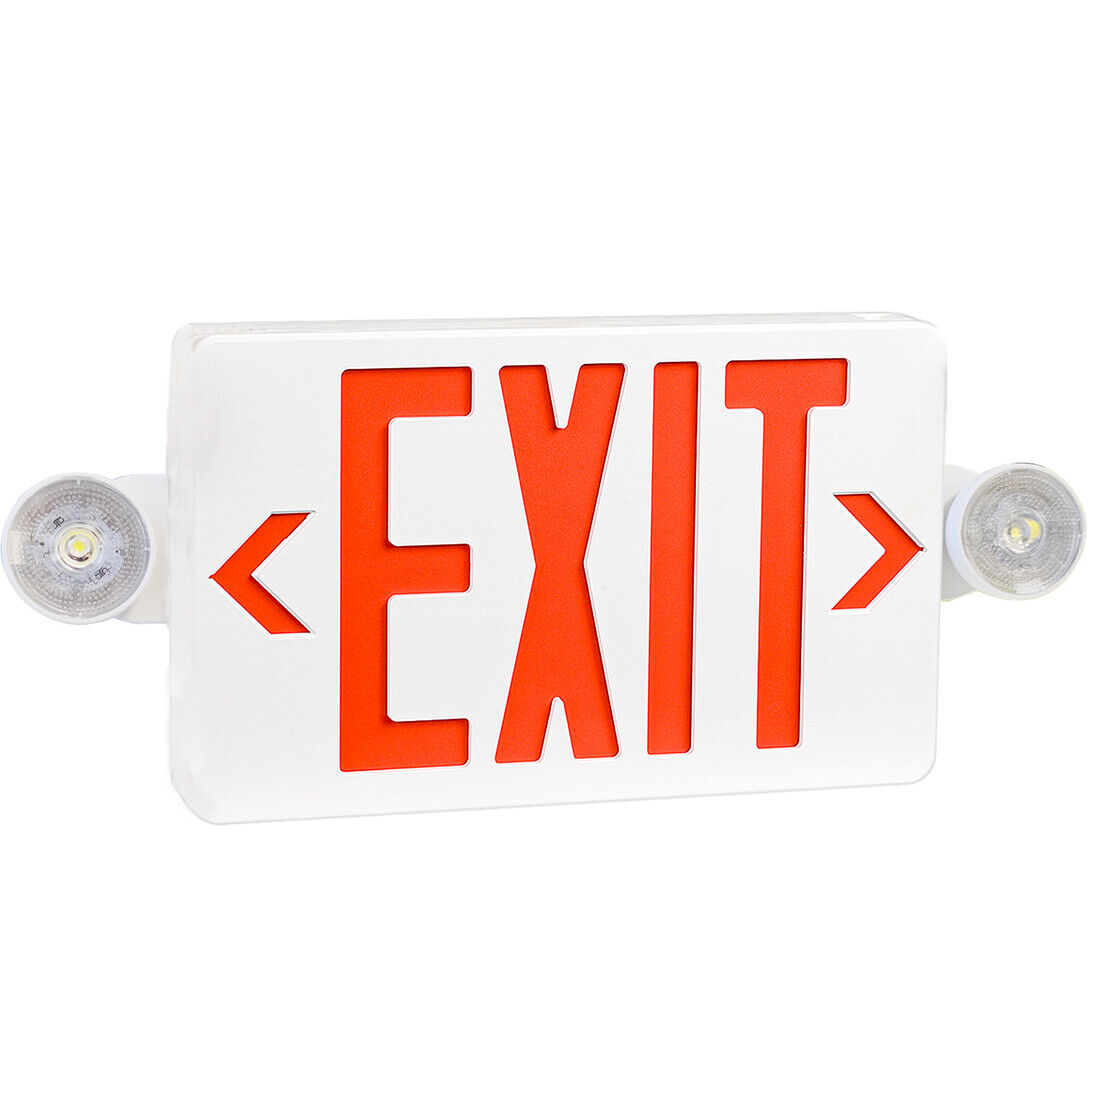 LED Exit Sign lamp & Emergency Light – Dual LED Lamp UL-94 Fire Resistance light